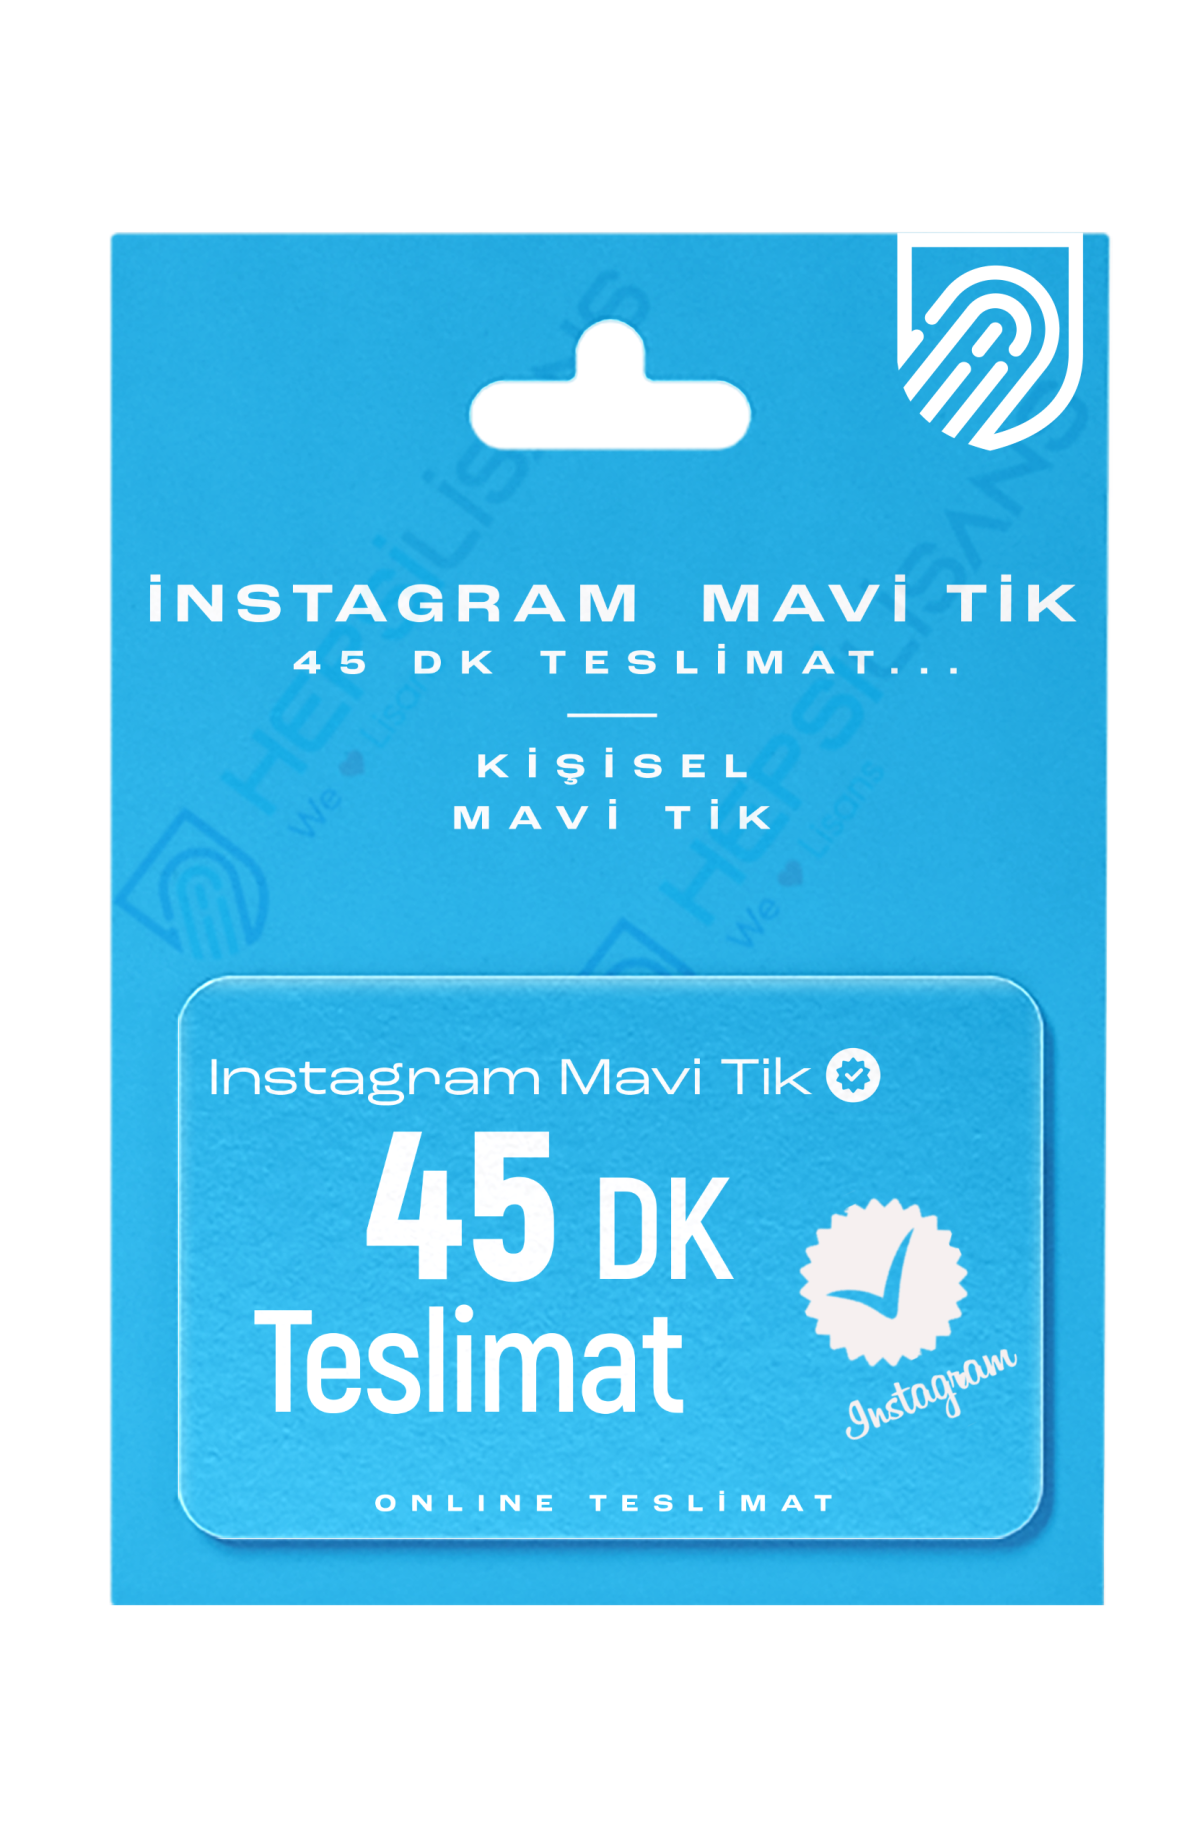 Instagram Mavi Tik Hepsilisans